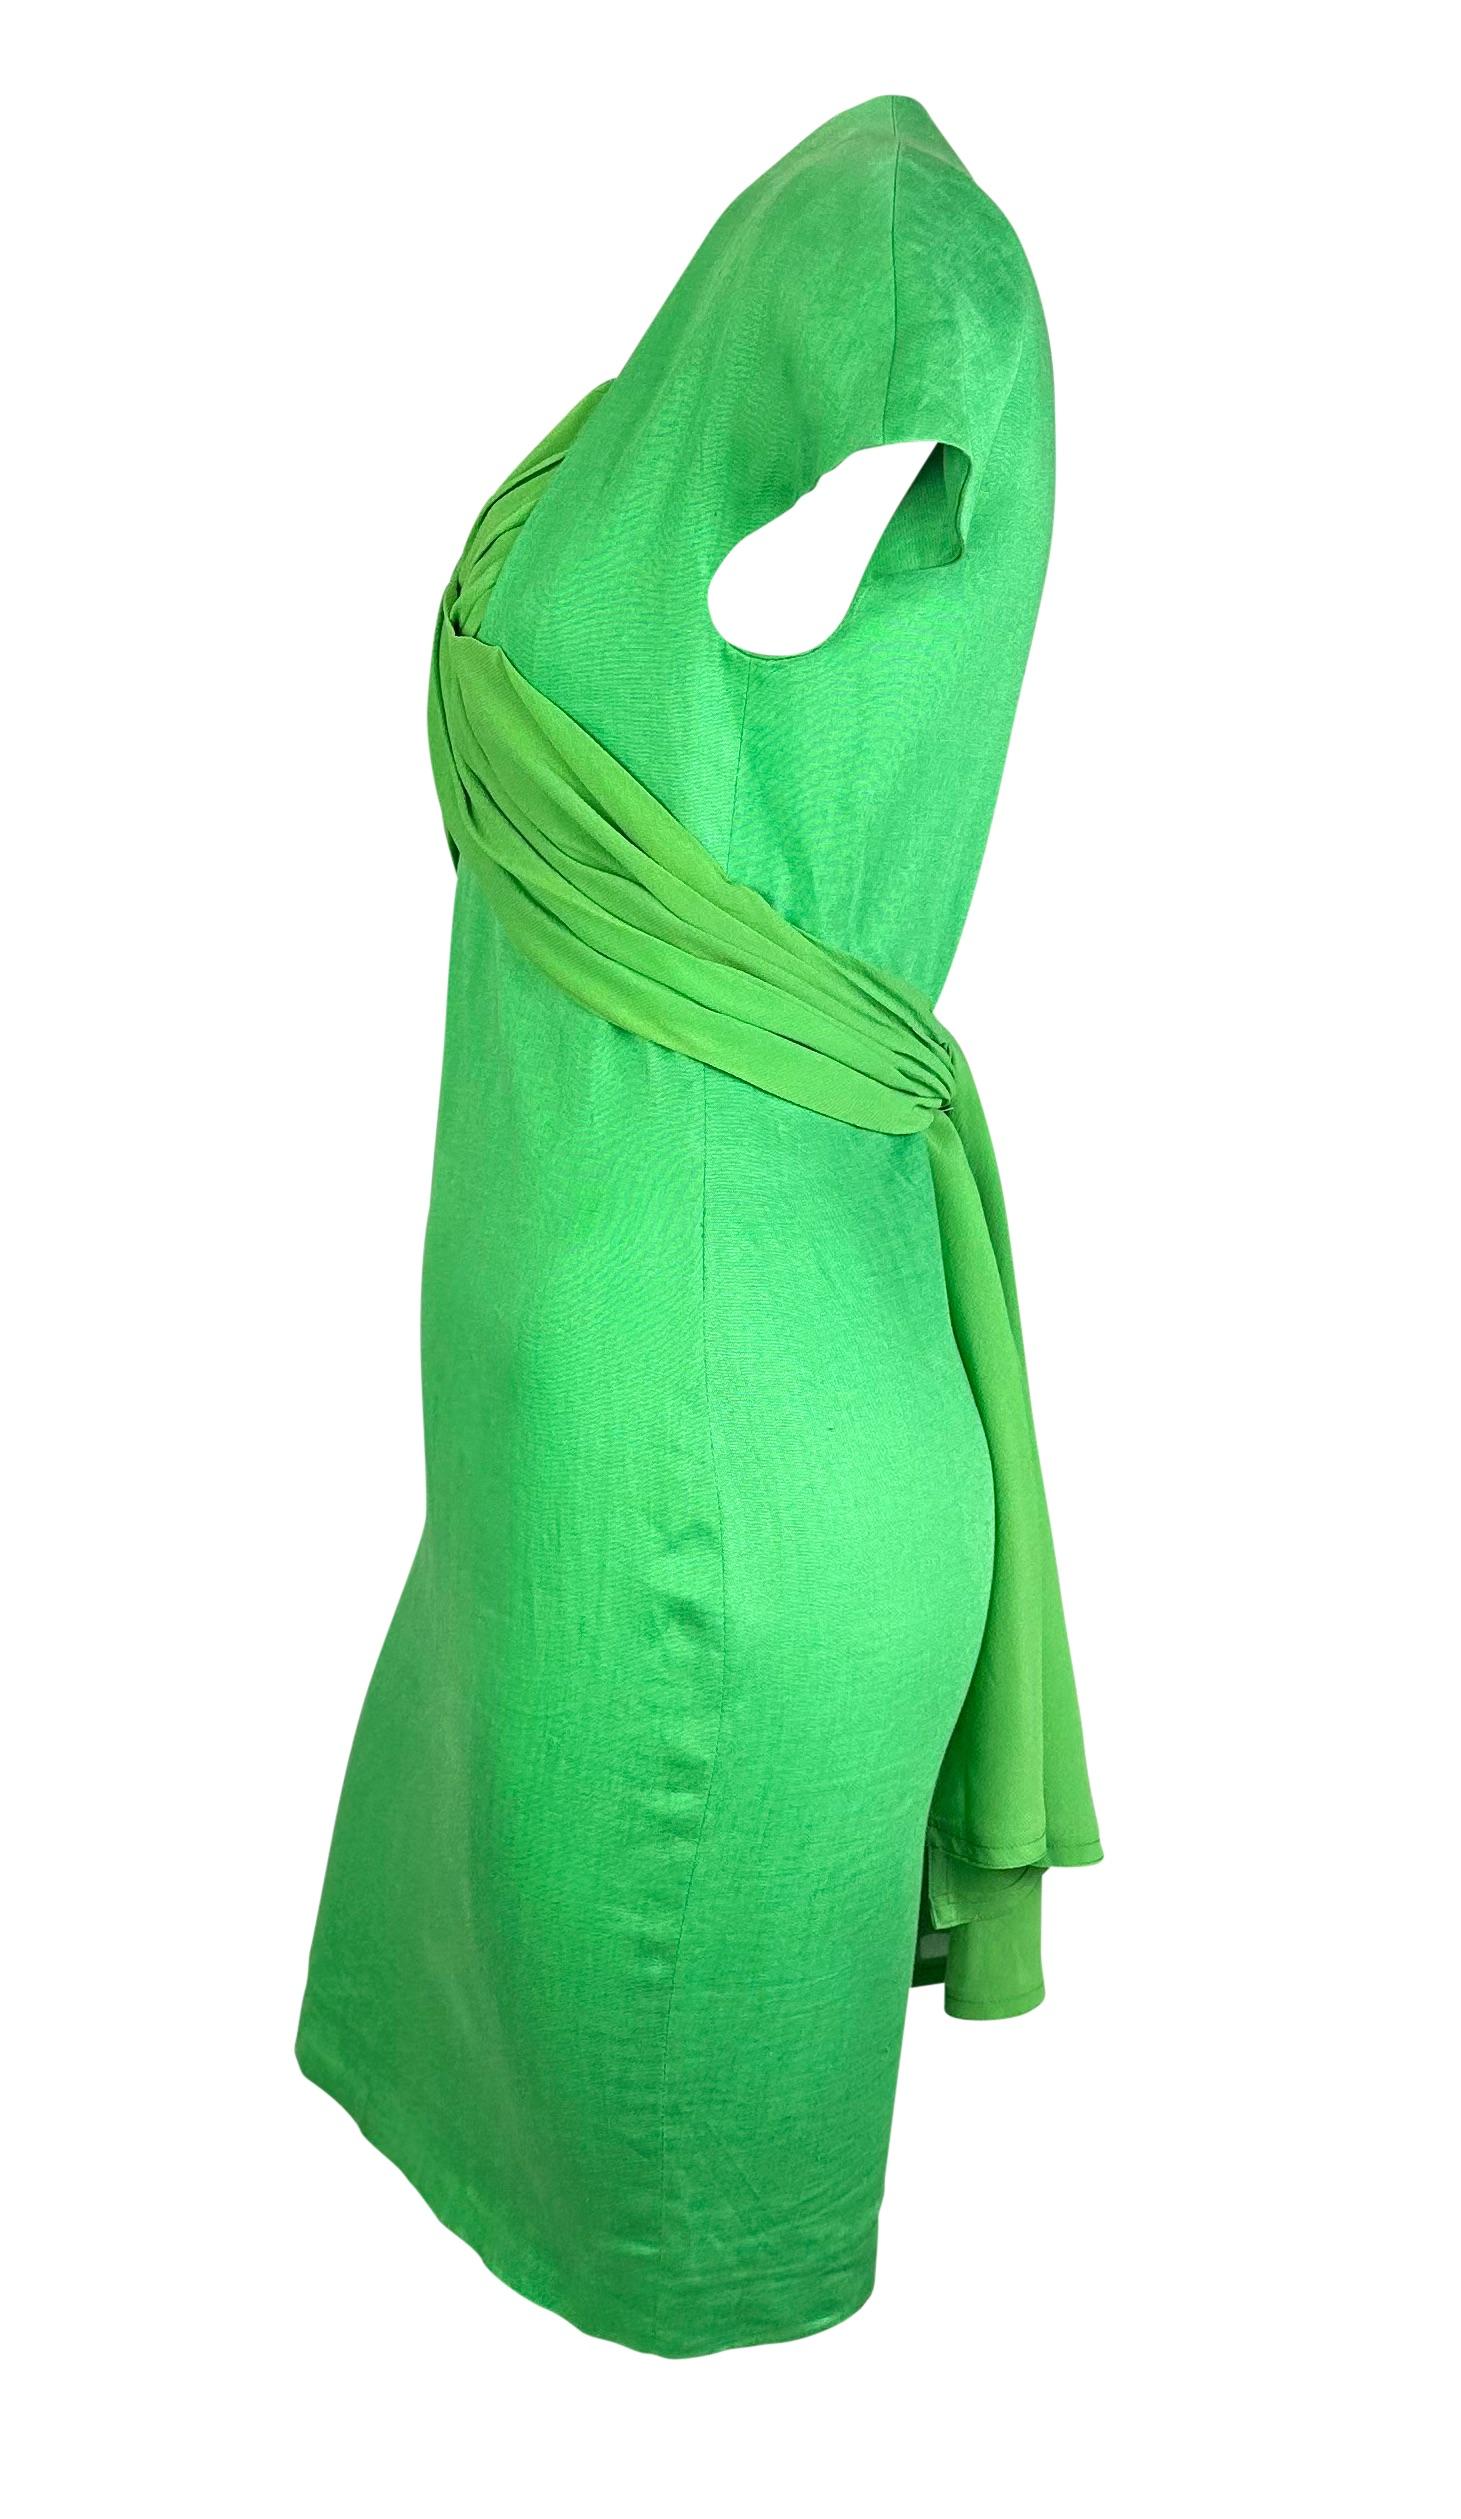 Vert S/S 1989 - Gianni Versace Runway - Robe de défilé à cravate en mousseline de lin vert vif en vente